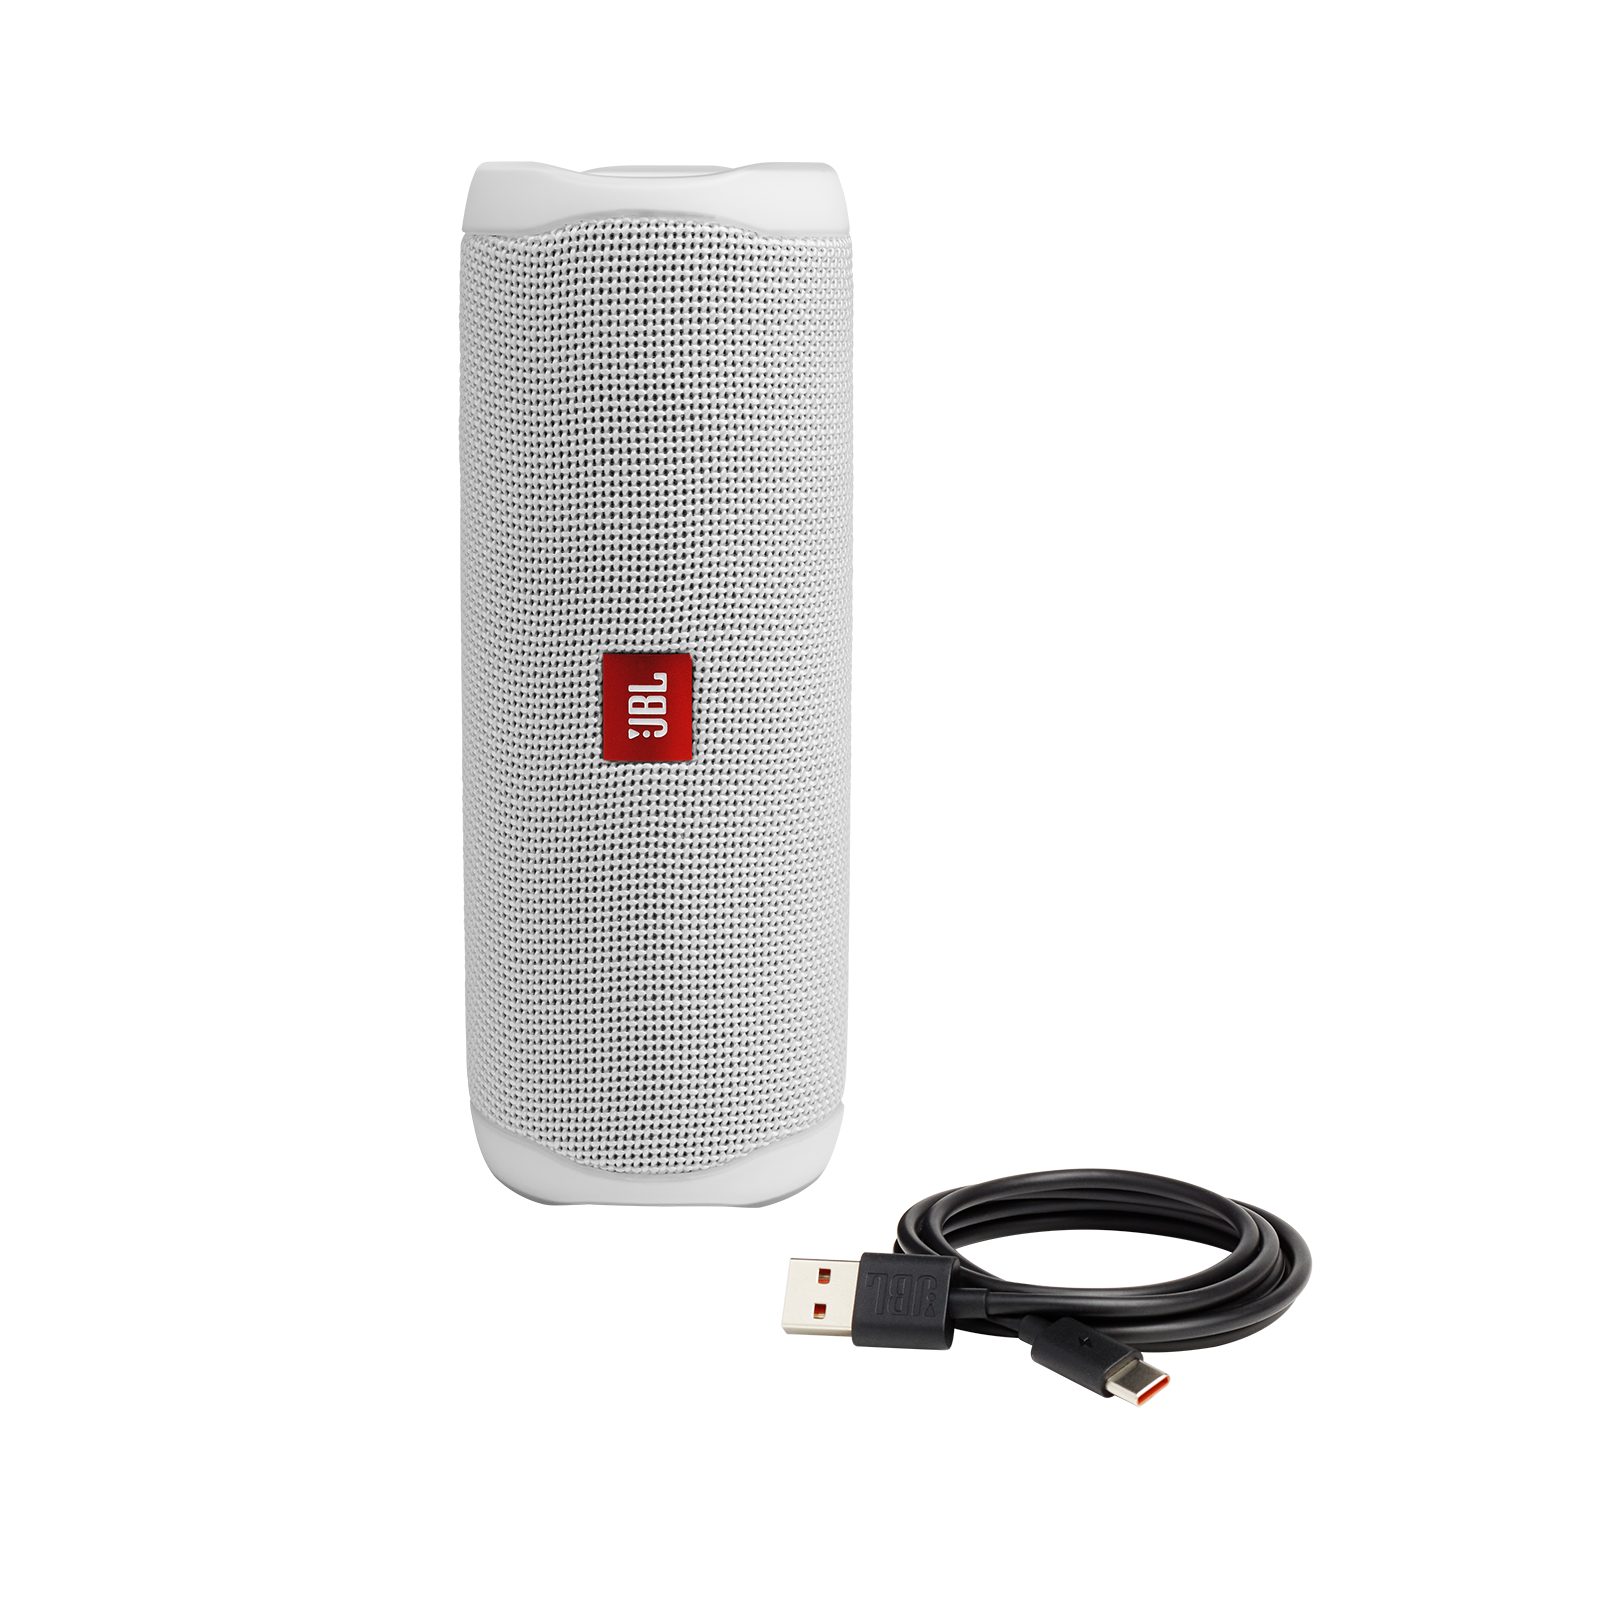 JBL Flip 5 - White - Portable Waterproof Speaker - Detailshot 1